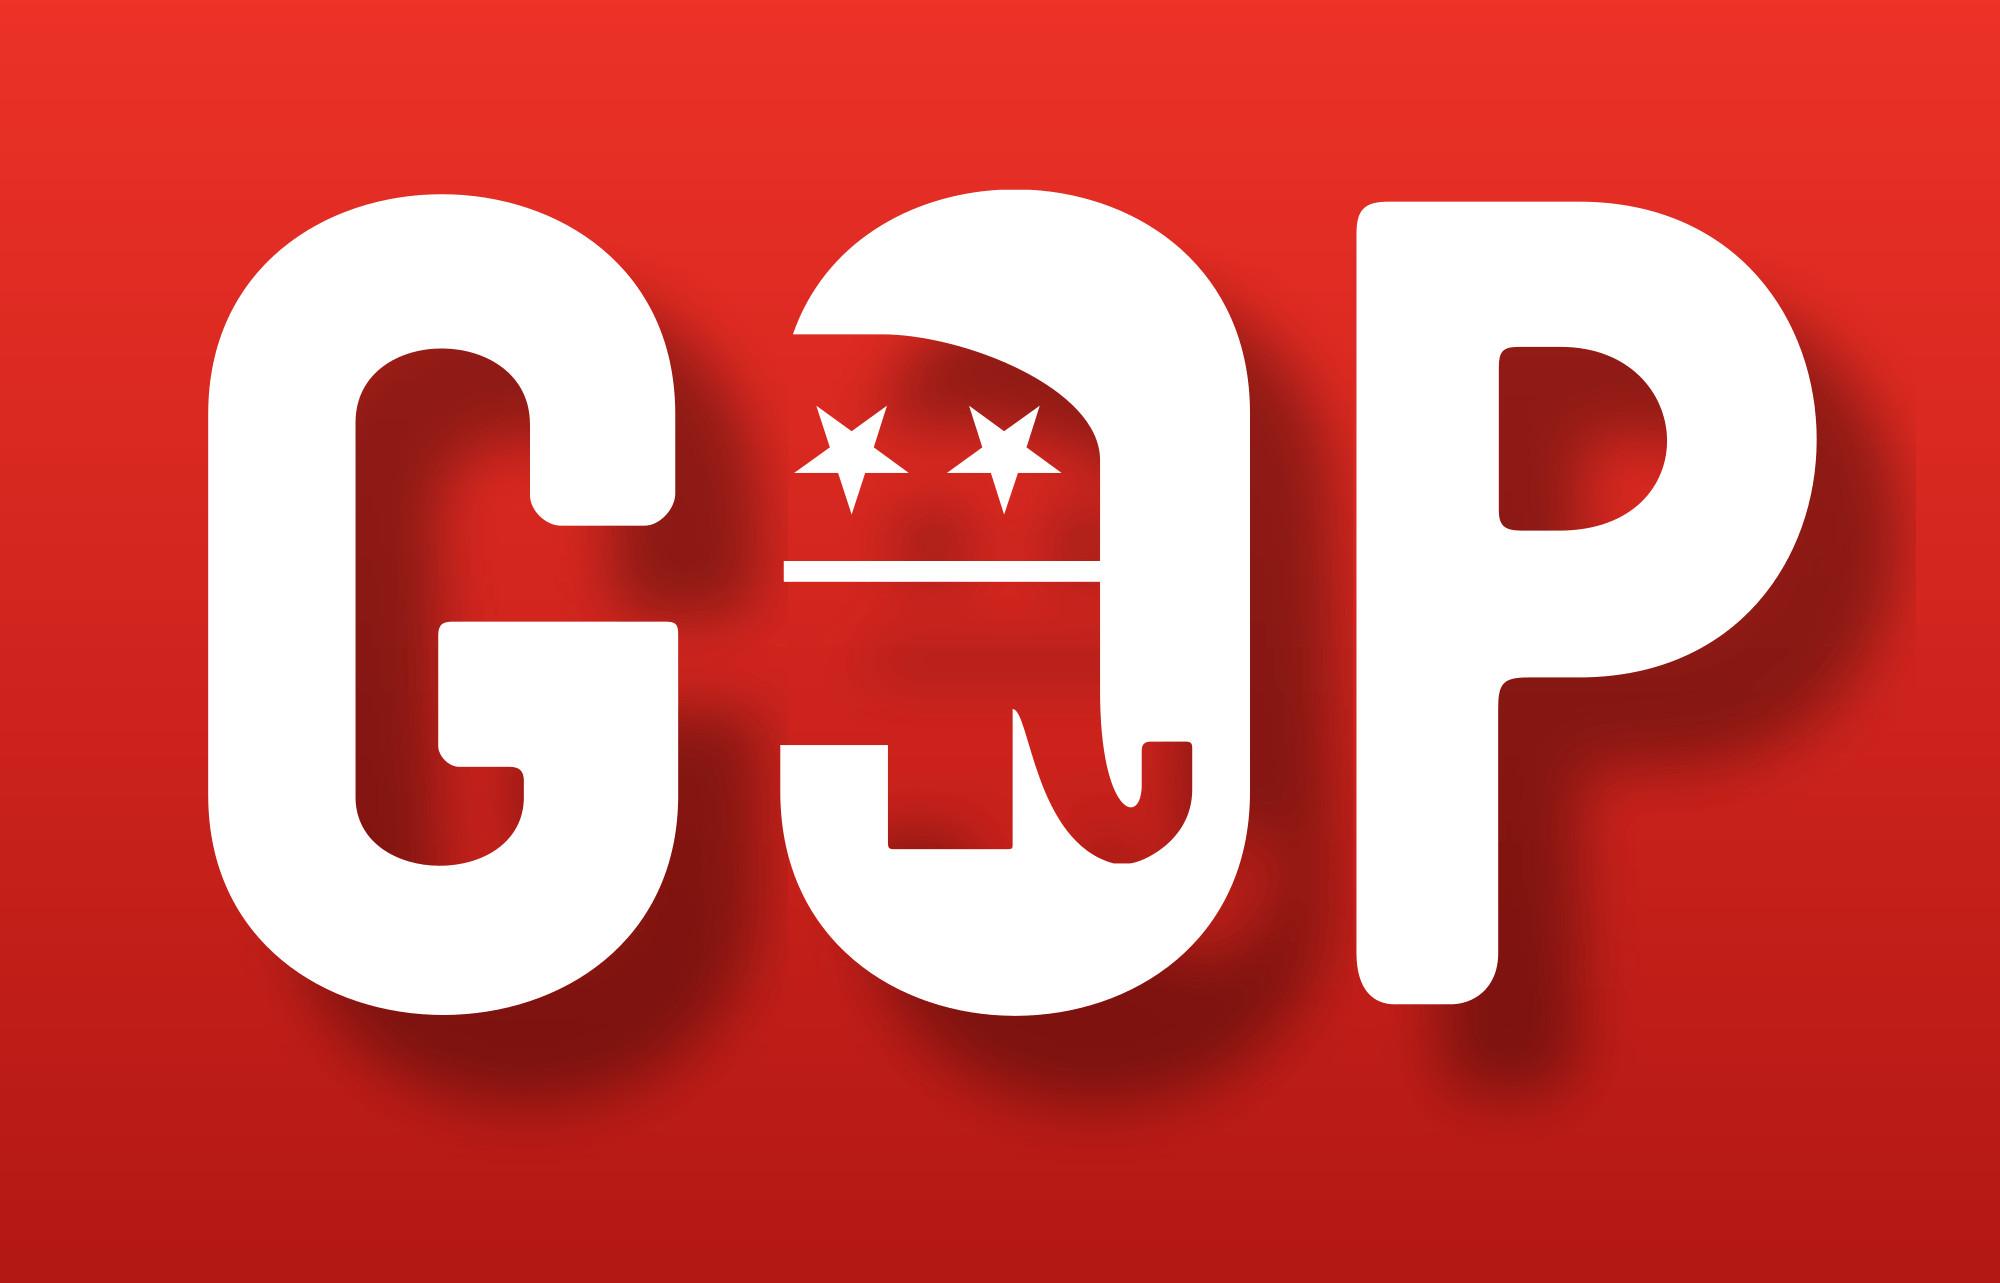 Republican Wallpaper Background